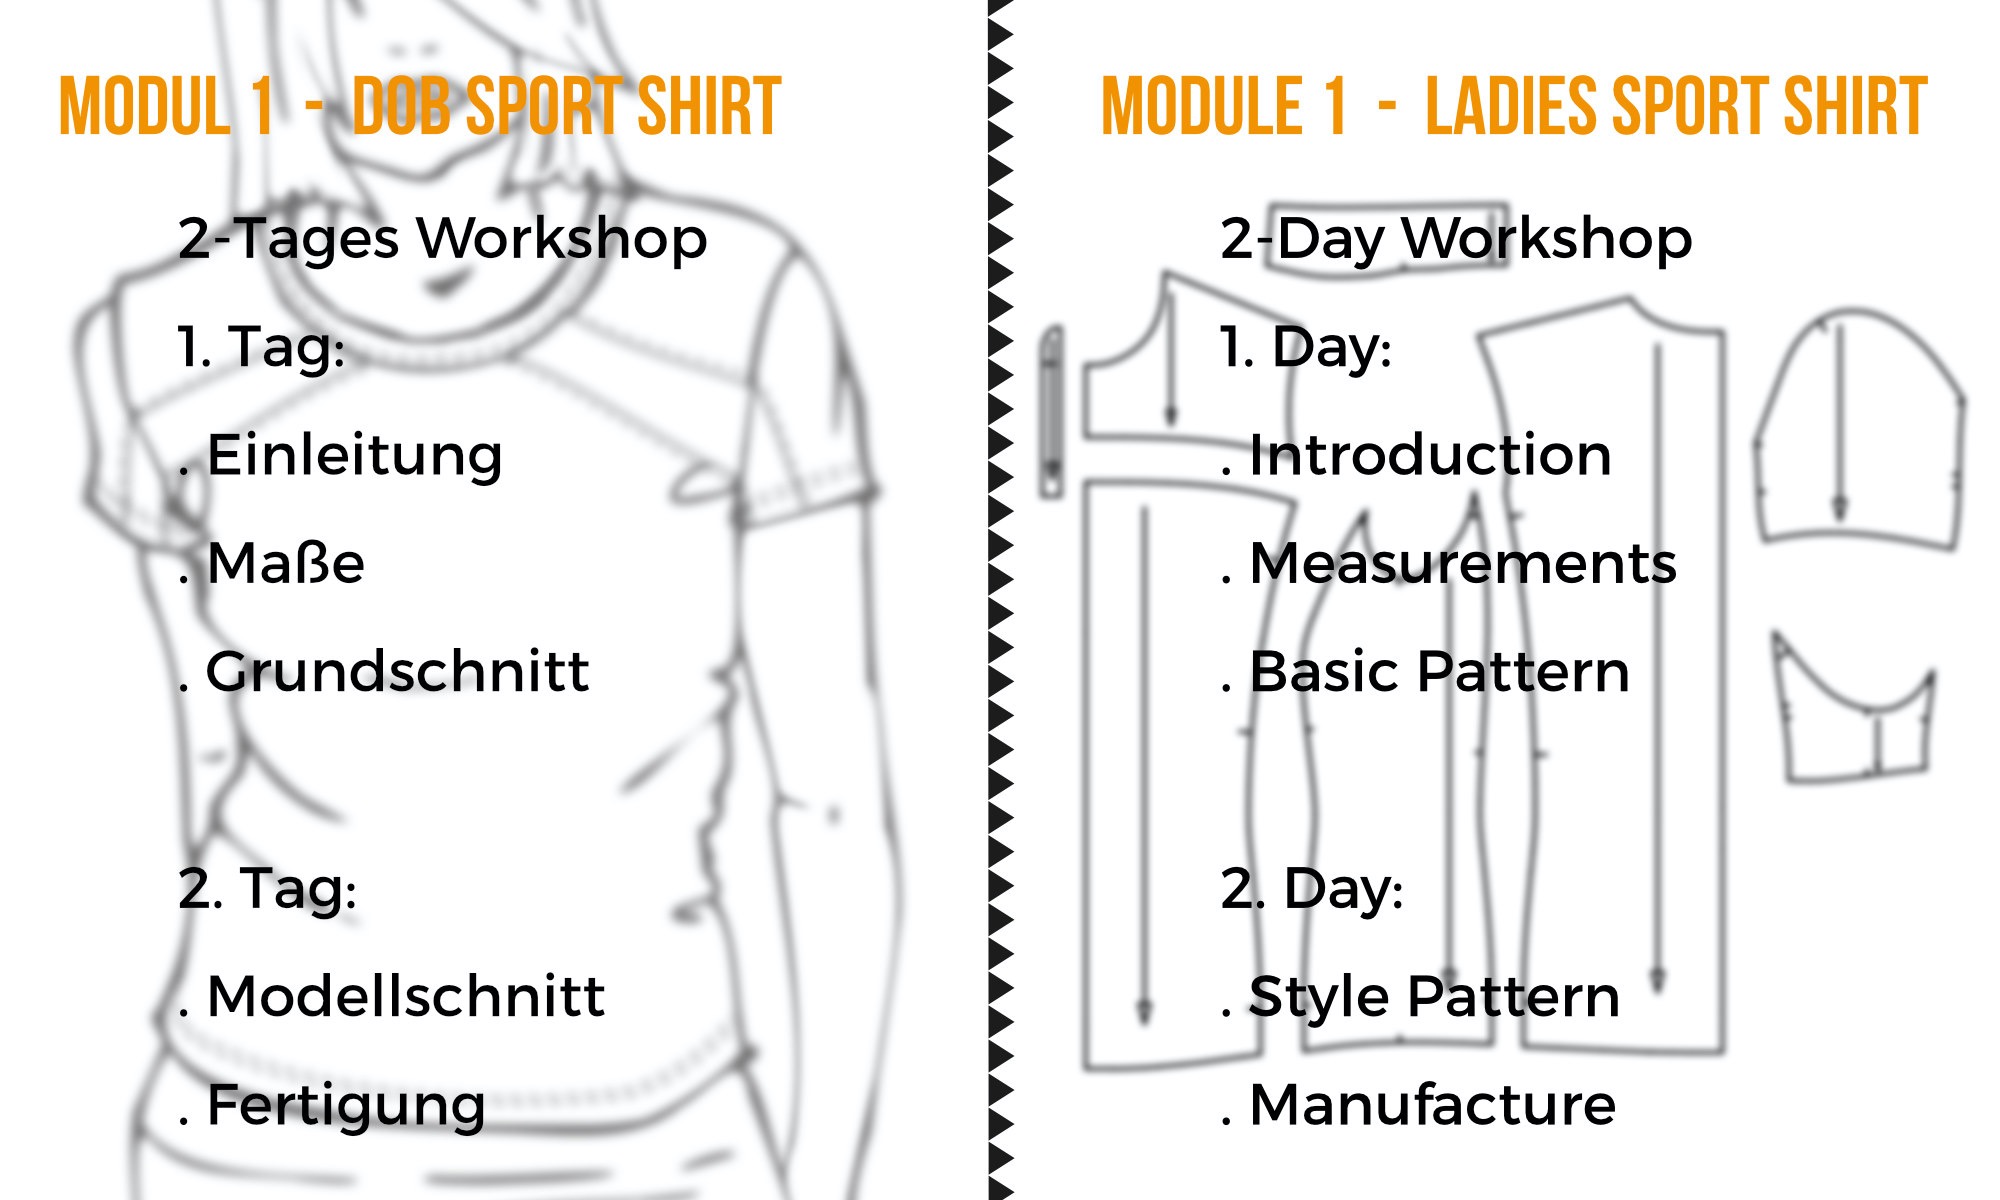 module 1 - ladies sport shirt